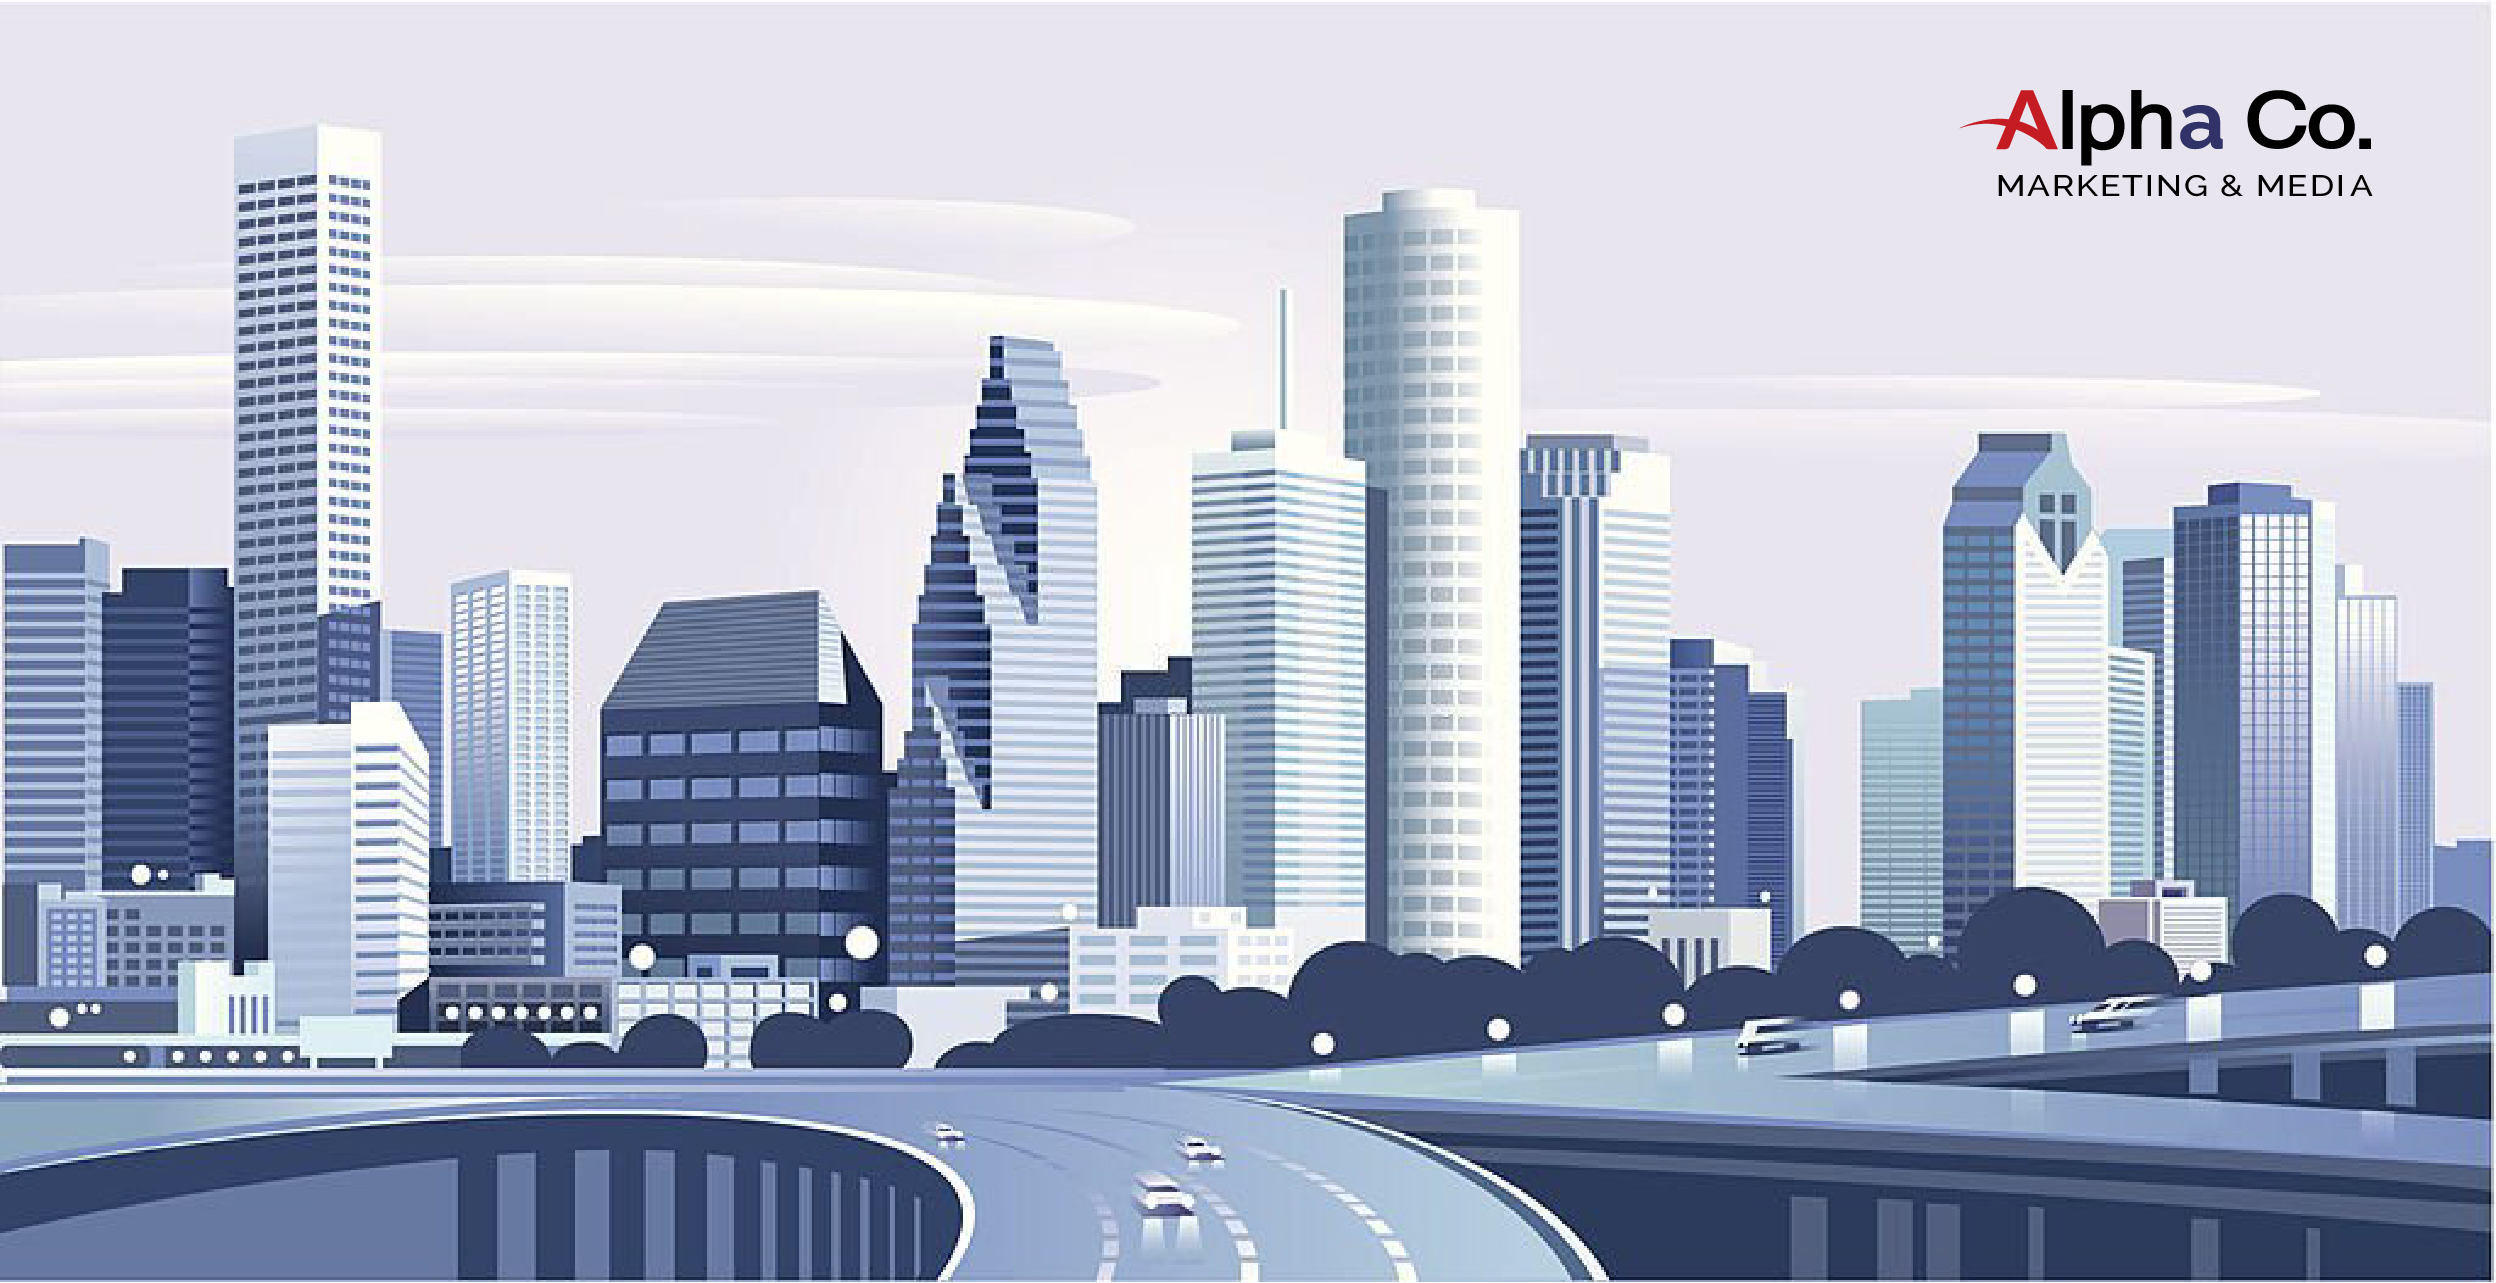 Alpha Co - Houston SEO: An illustration of the city of Houston's profile.